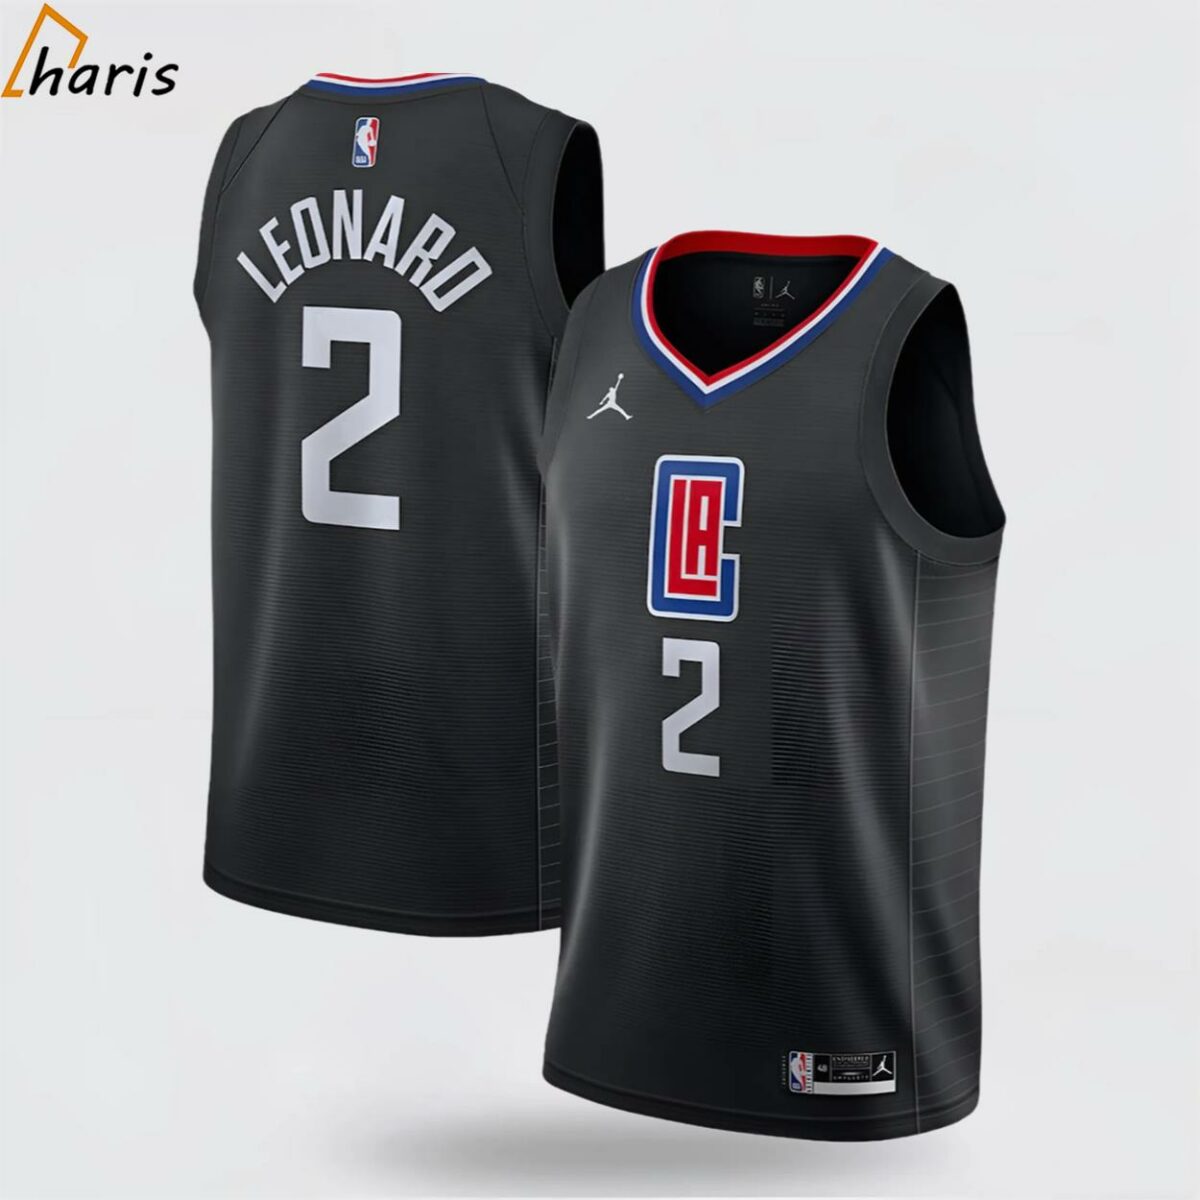 Kawhi Leonard LA Clippers Jordan Brand Swingman Jersey Statement Edition Black 1 jersey